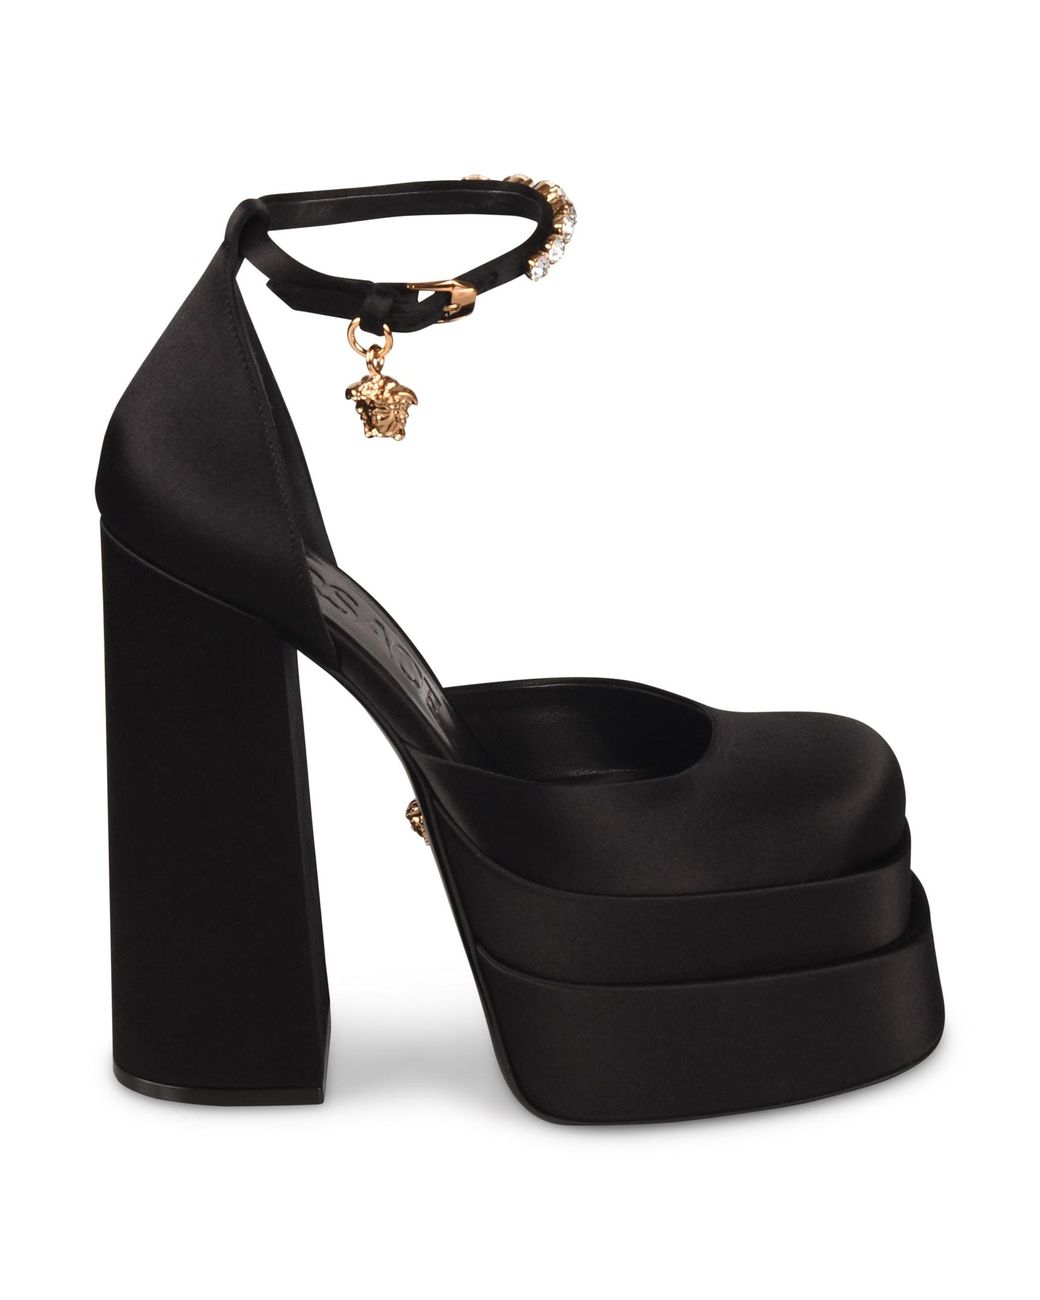 Versace Crystal Embellished Block Heel Wedge Sandals in Black/Gold ...